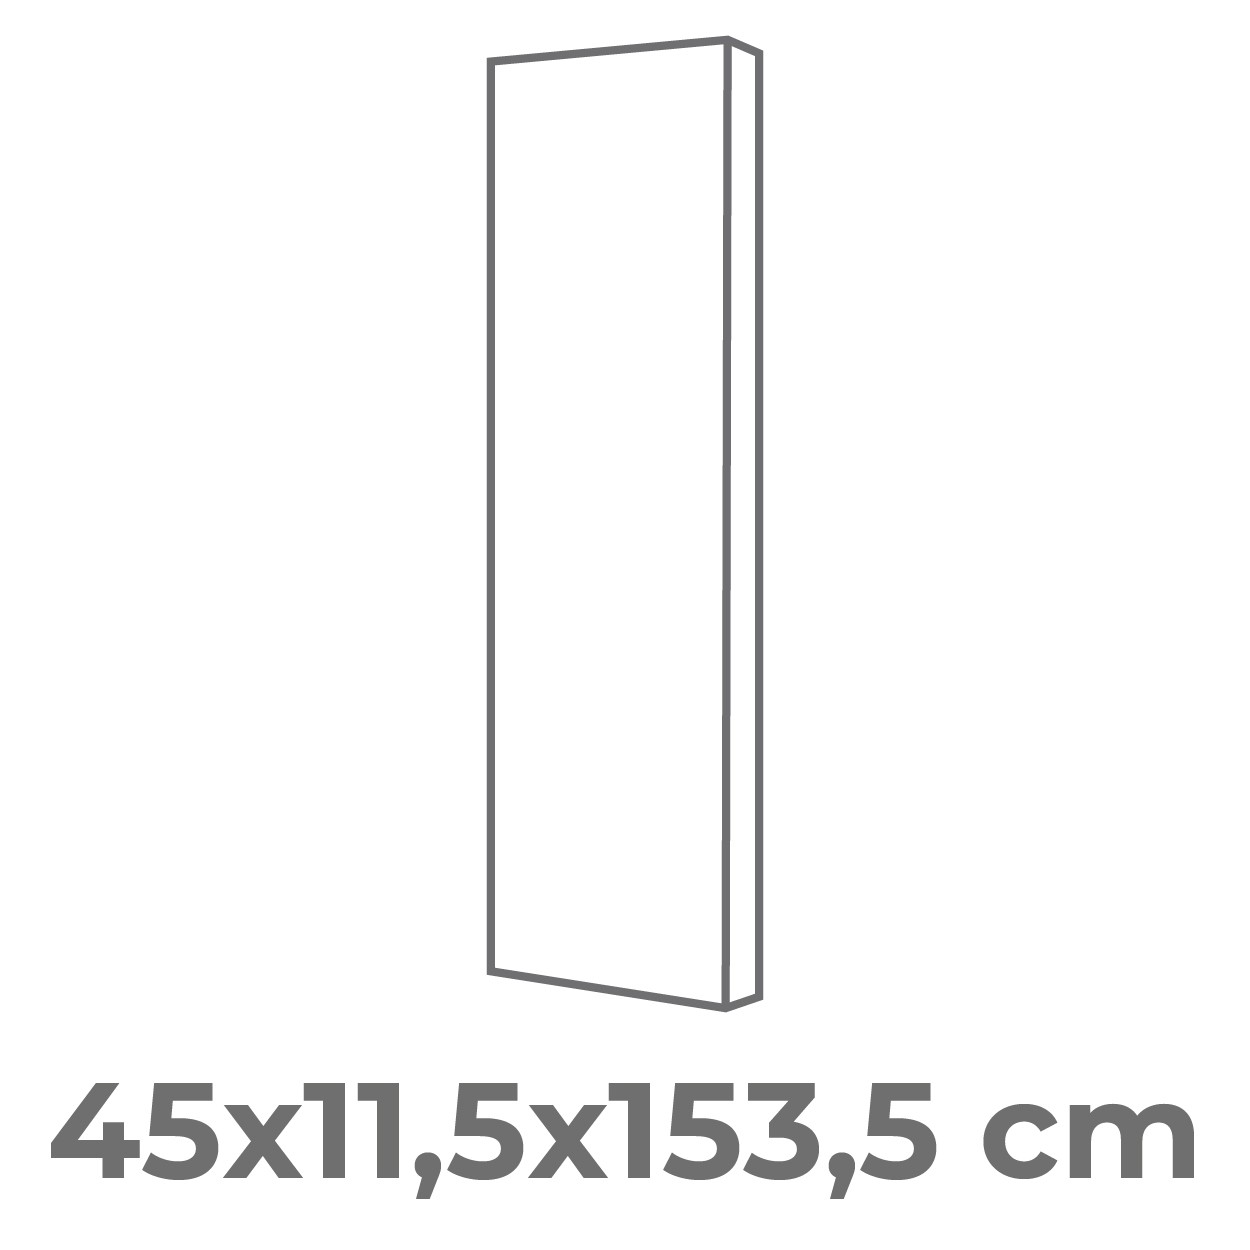 45x11,5x153,5 cm